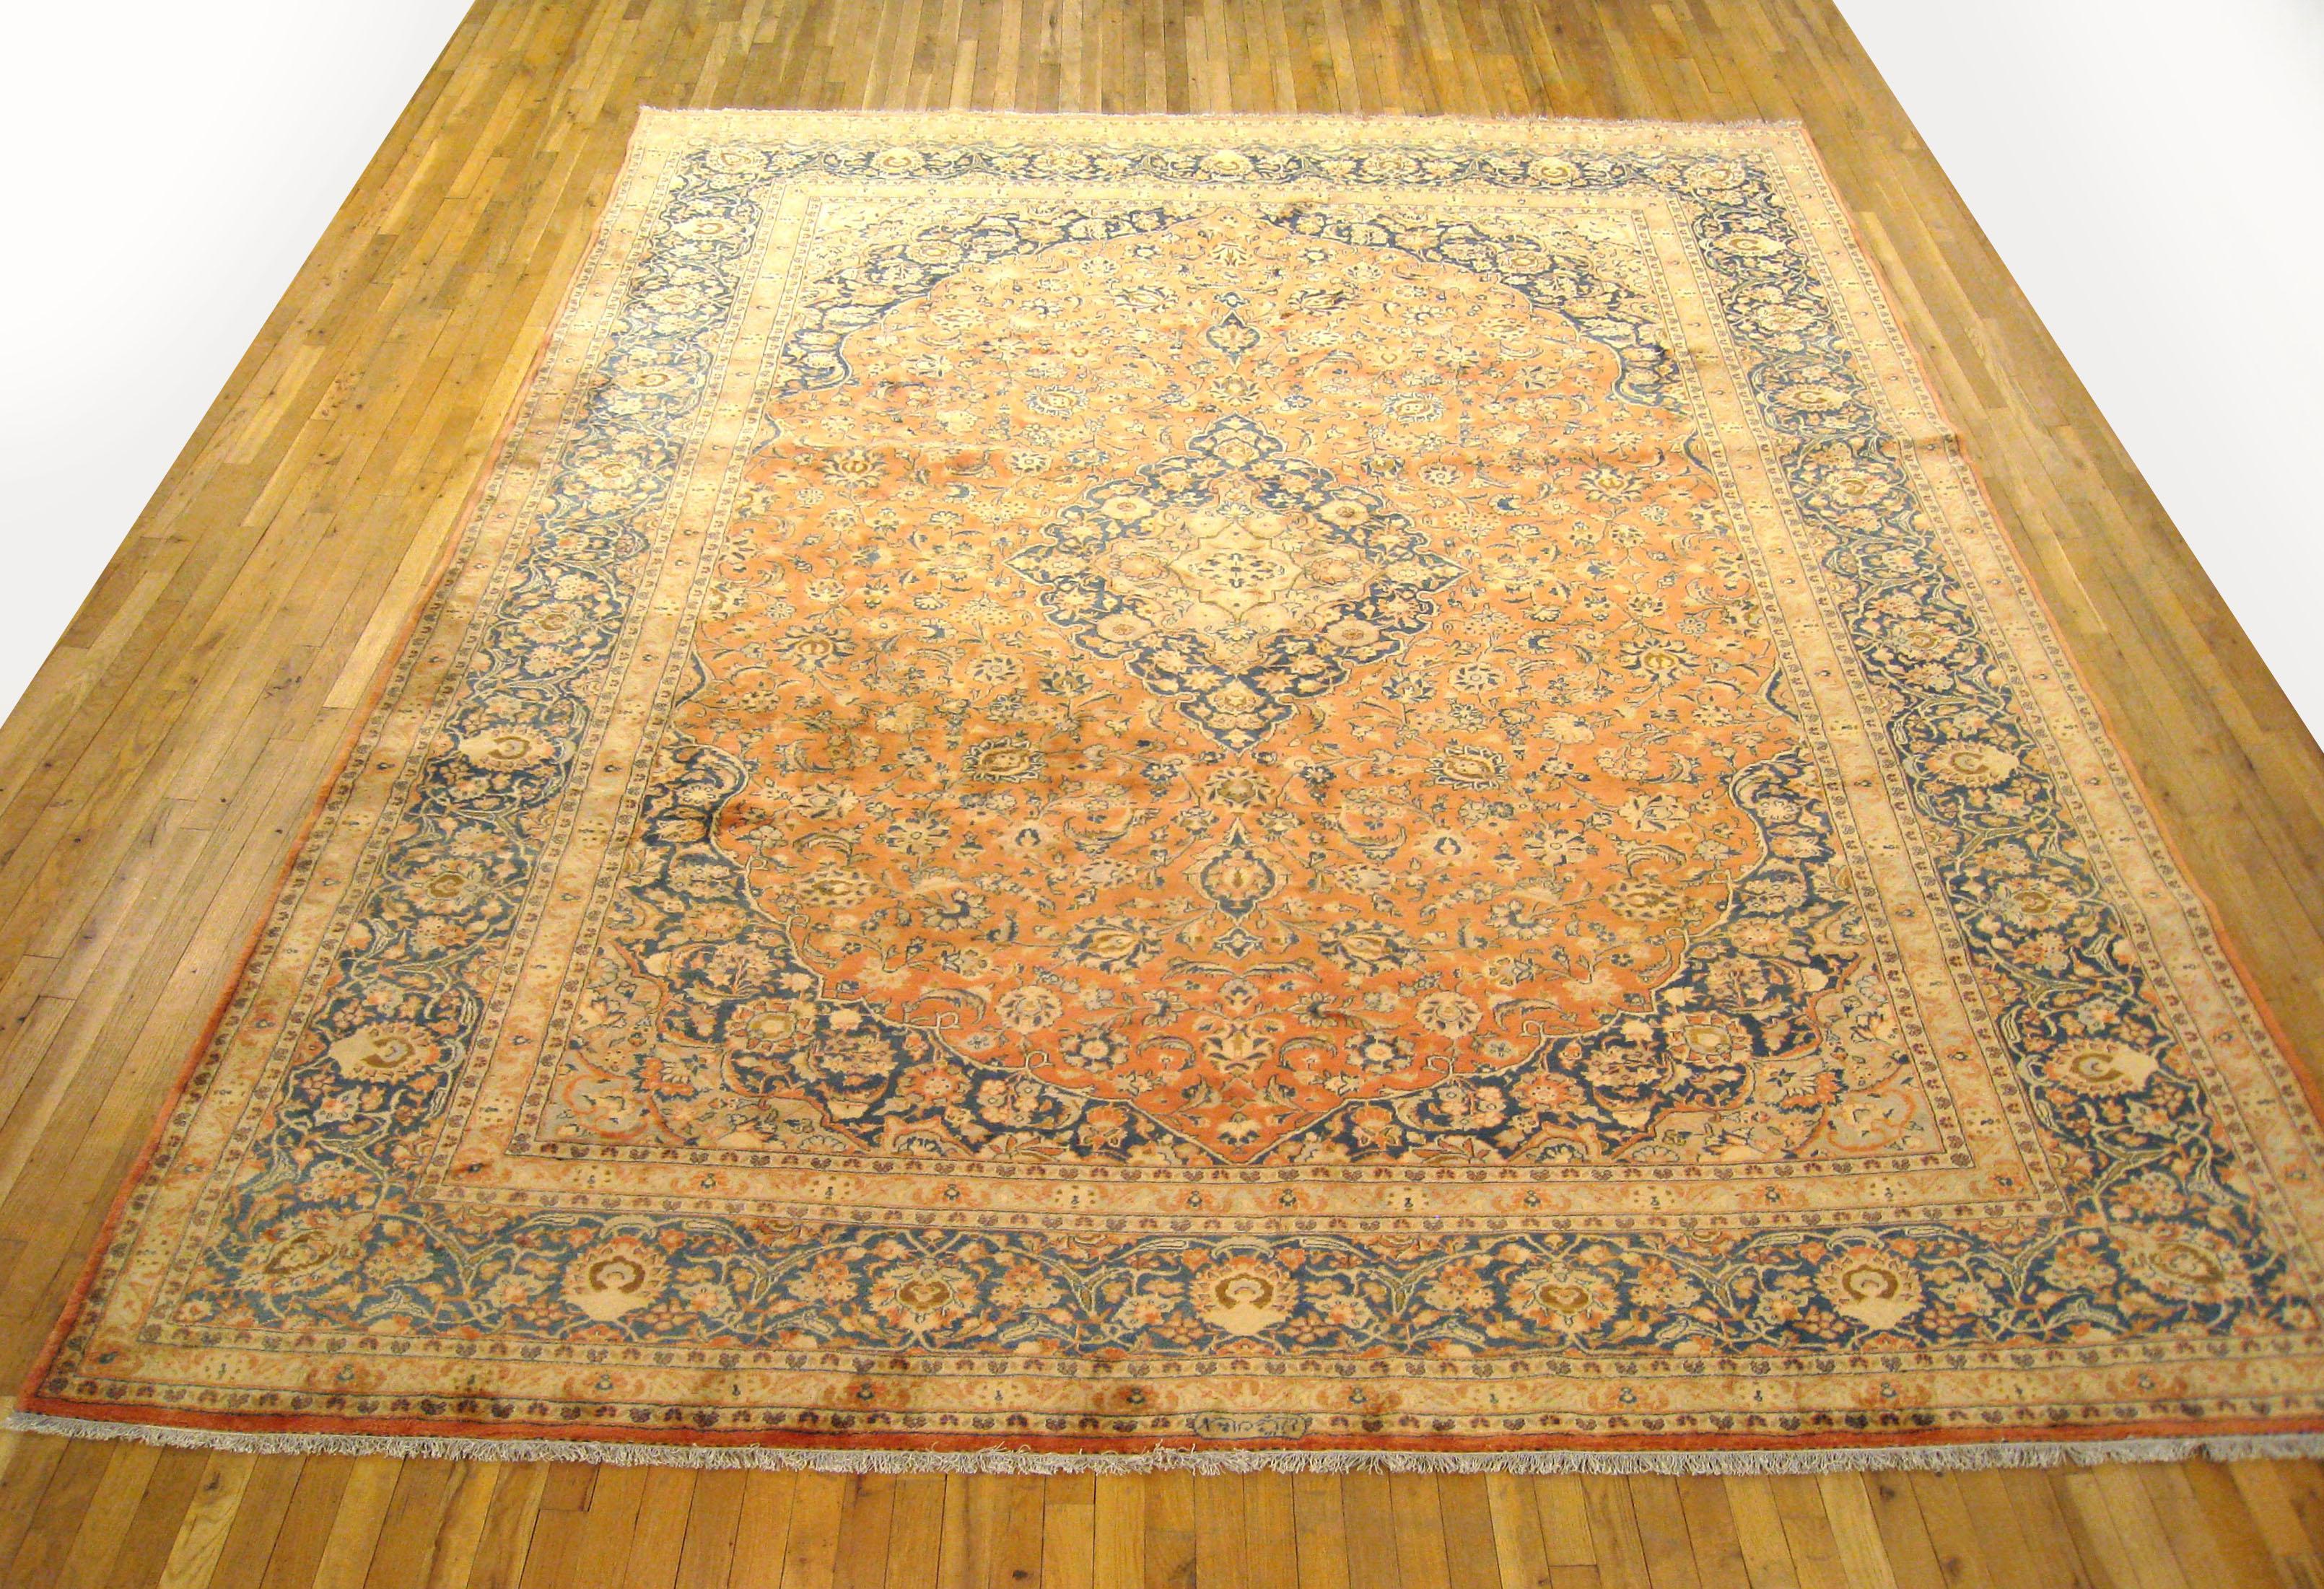 Vintage Persian Kashan Oriental carpet, in Room Size

An extraordinary vintage Persian Kashan carpet, circa 1960, size 13'1